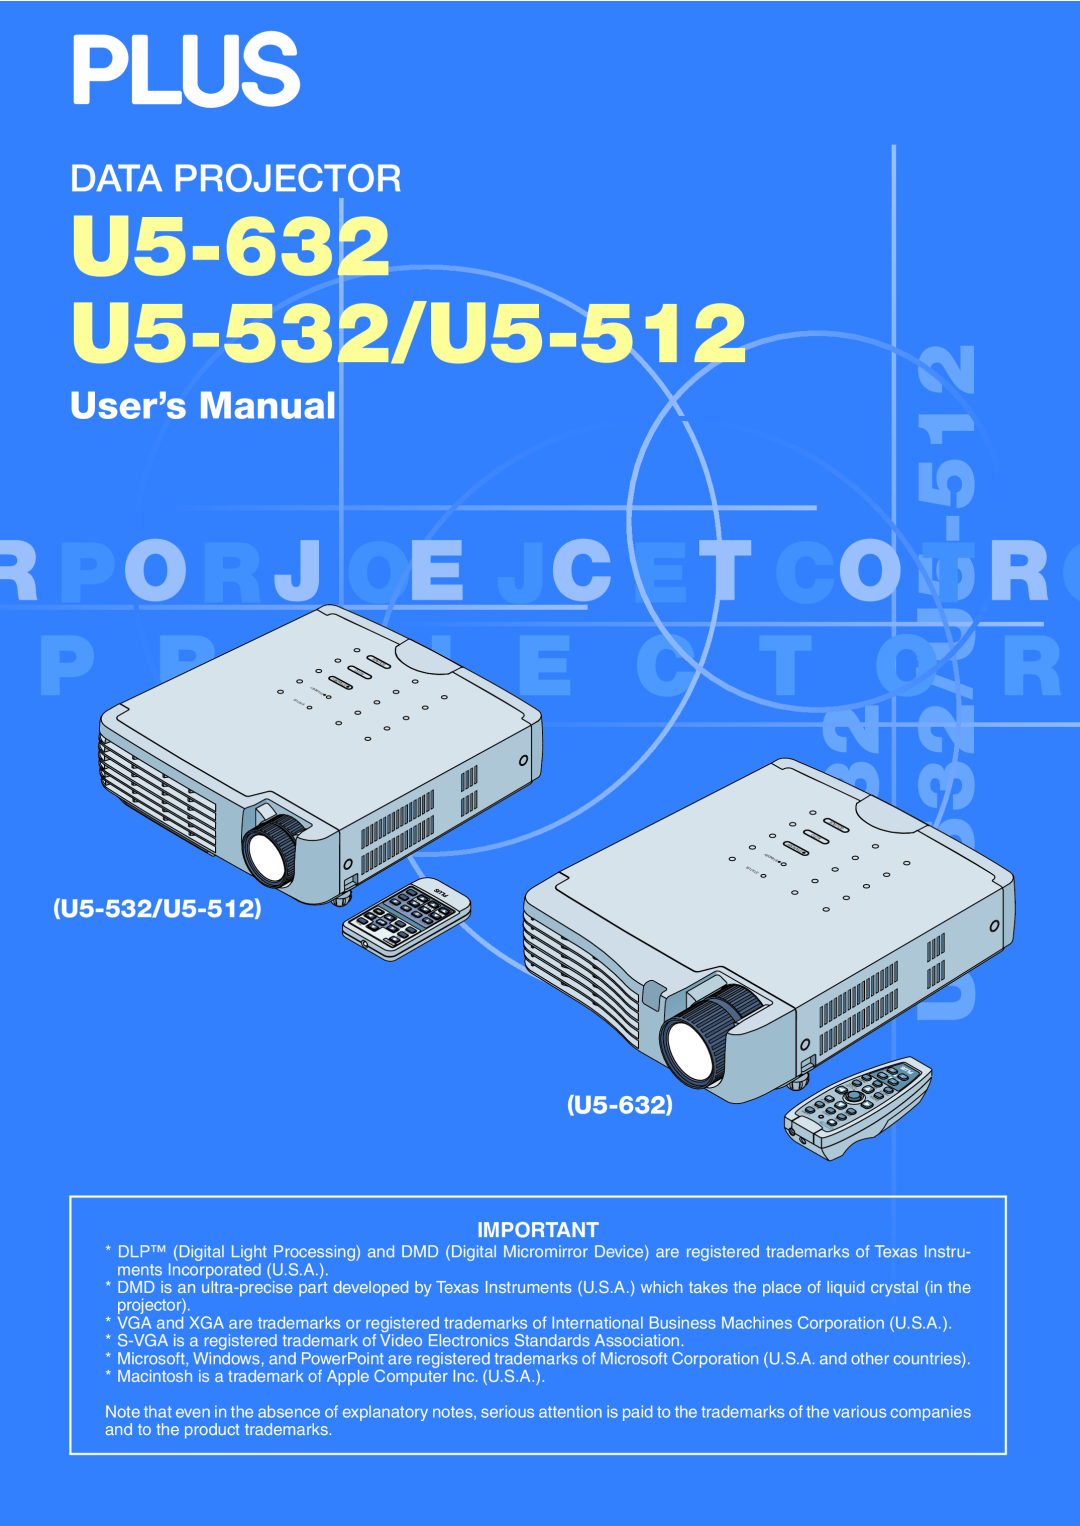 PLUS Vision user manual U5-632 U5-532/U5-512, Data Projector, User’s Manual 